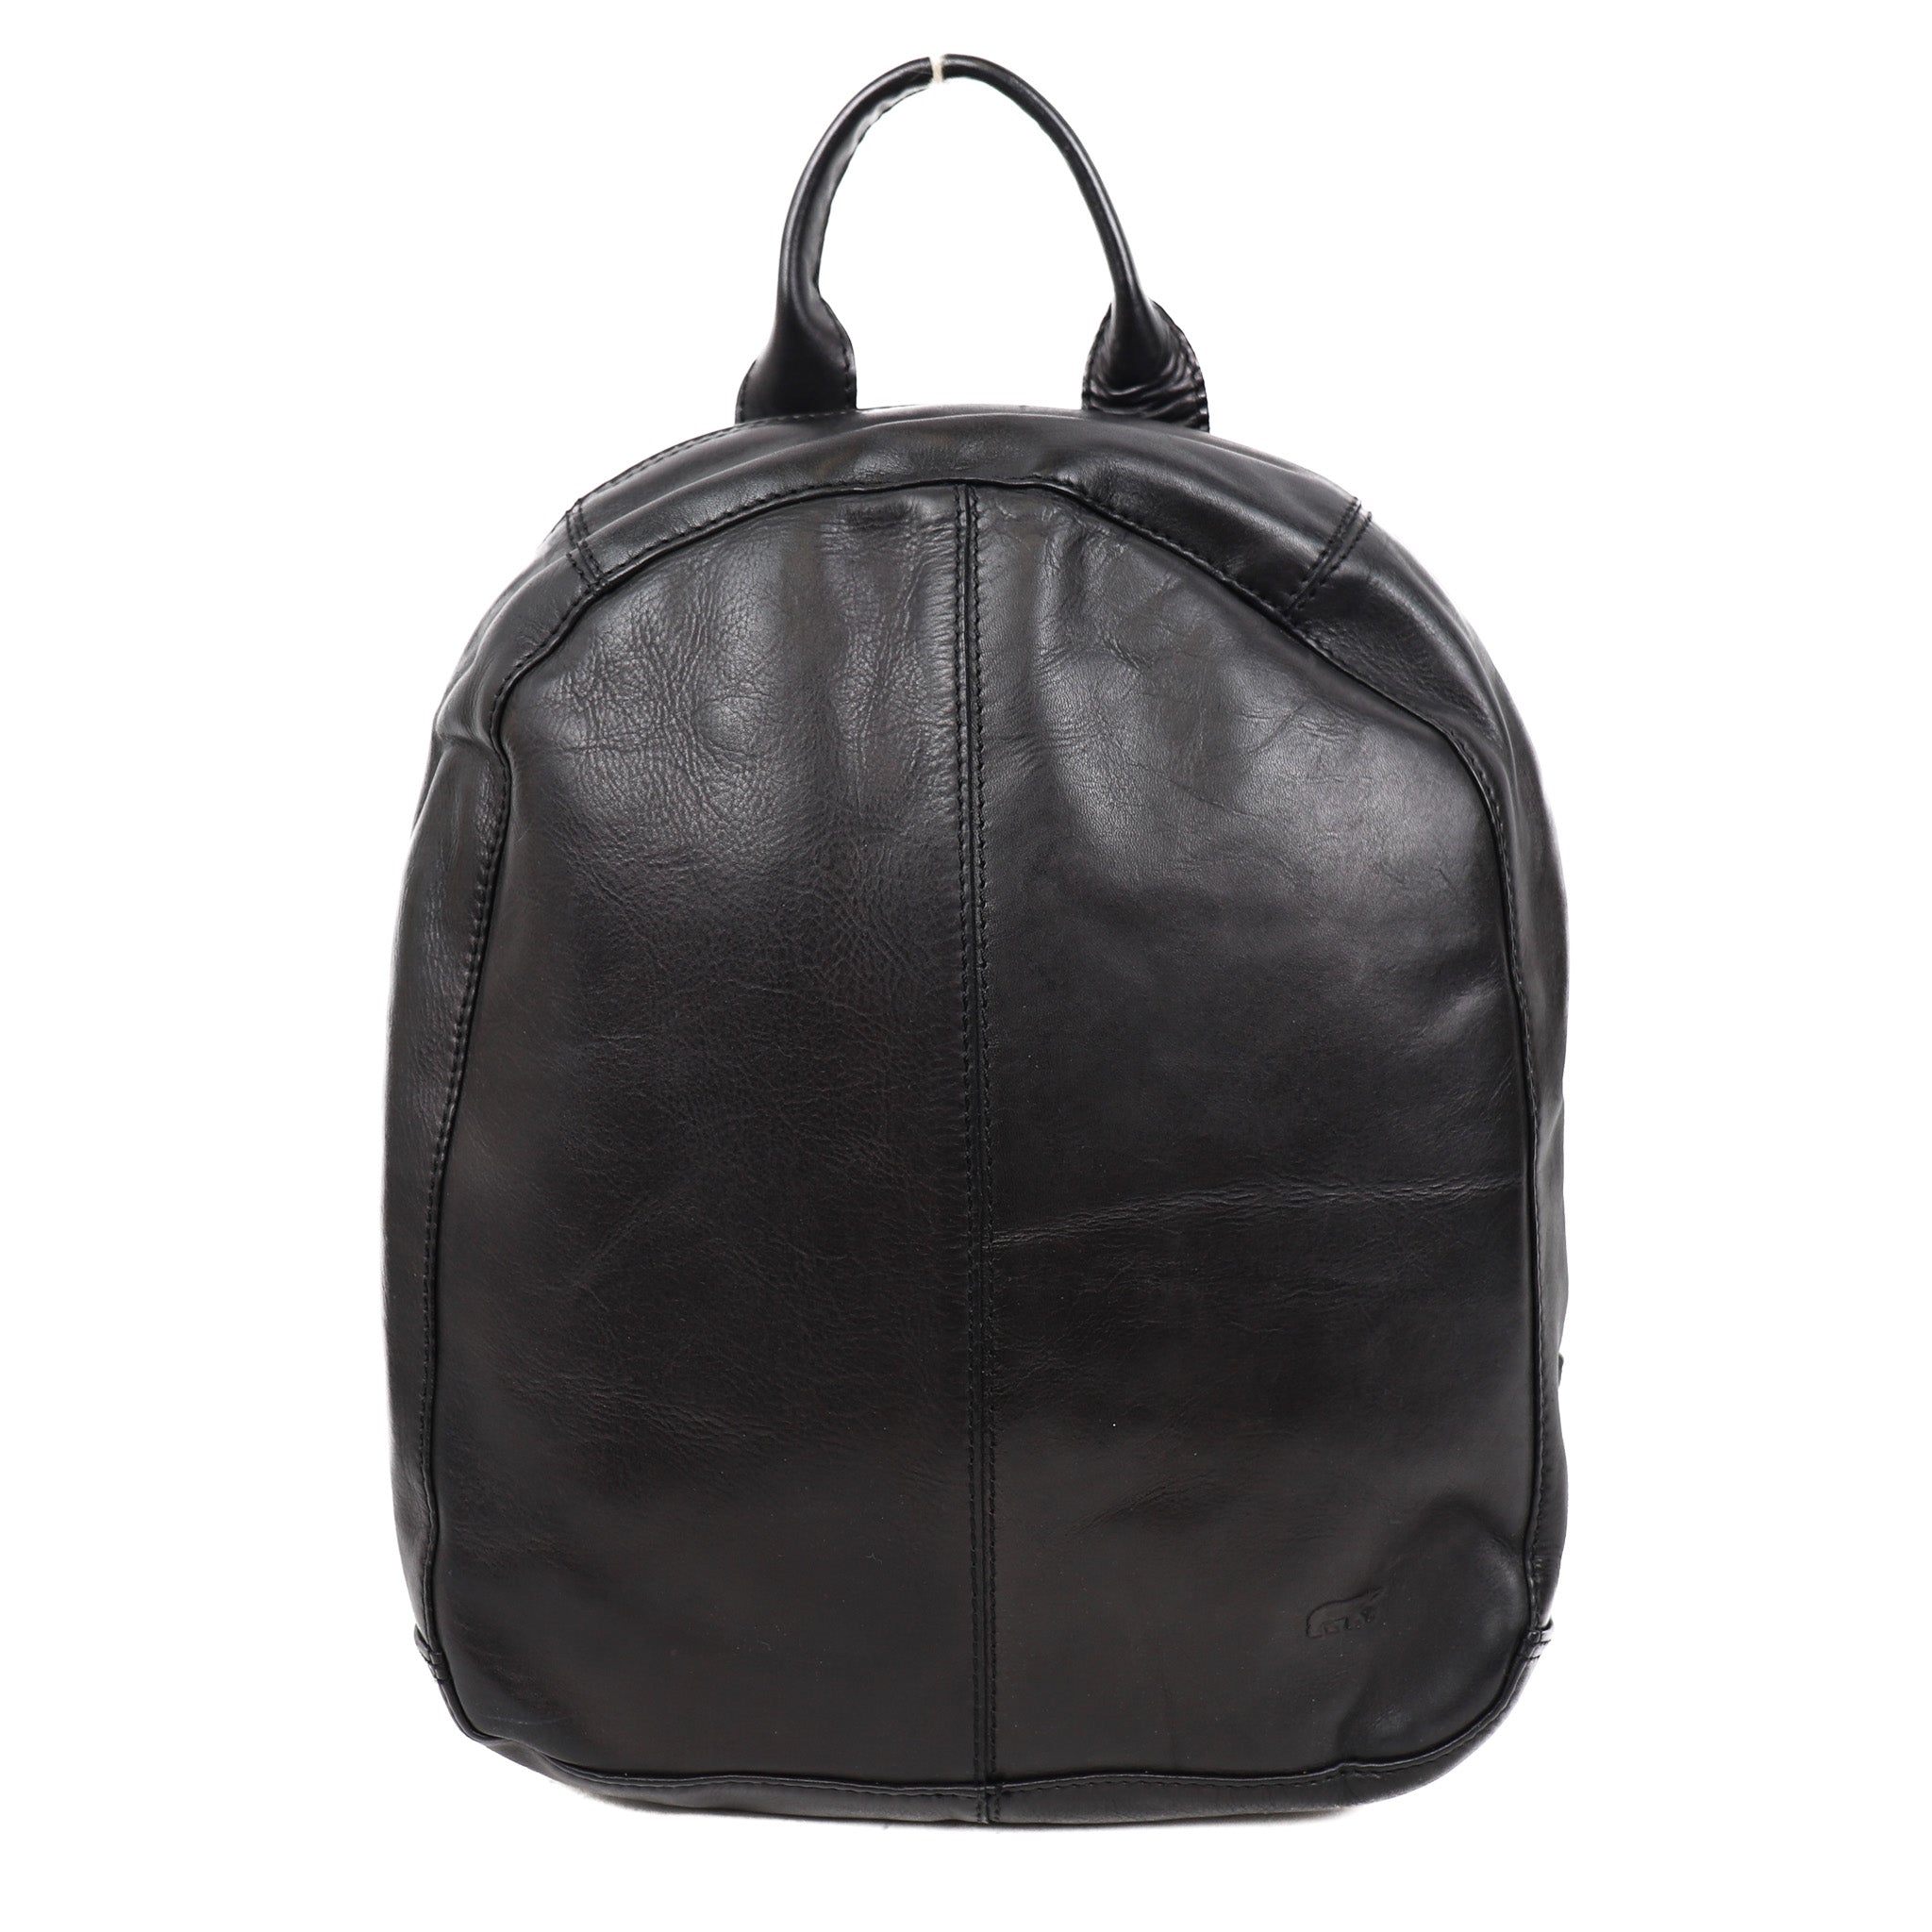 Backpack 'Dex' black